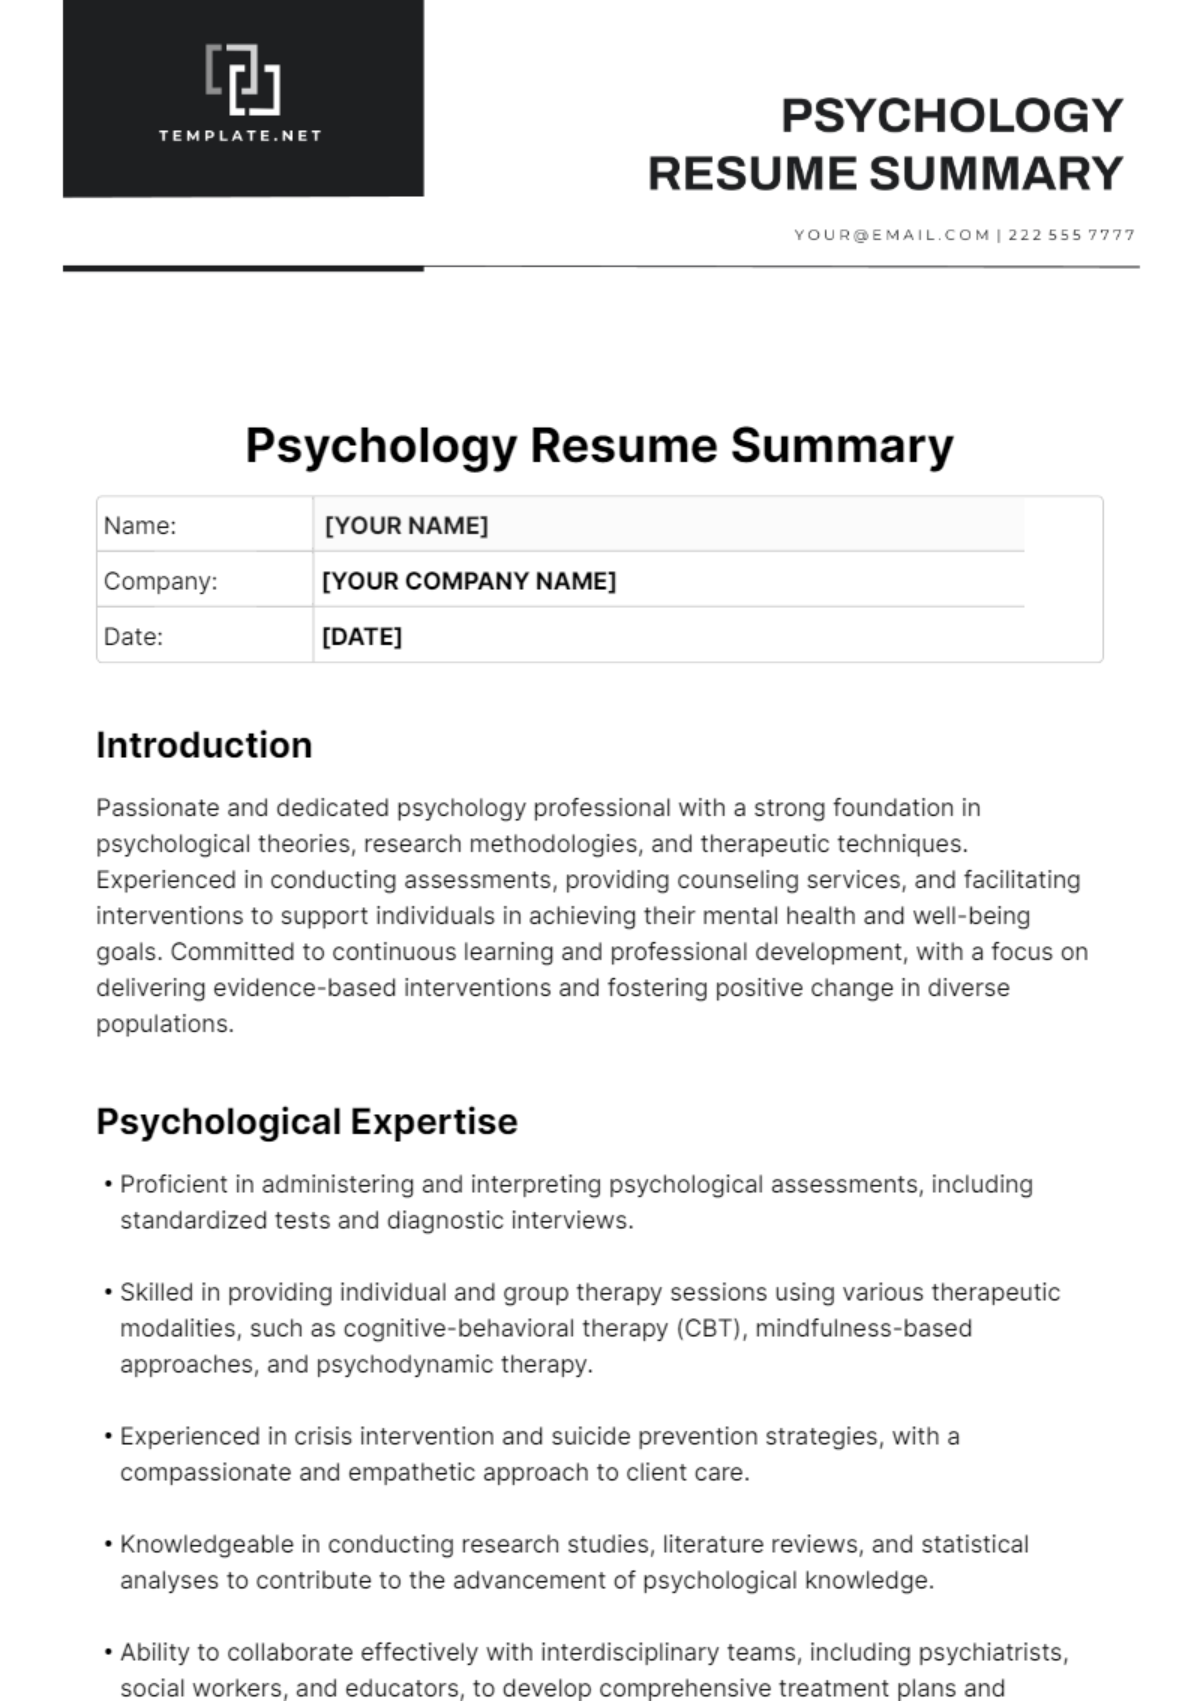 Psychology Resume Summary Template 